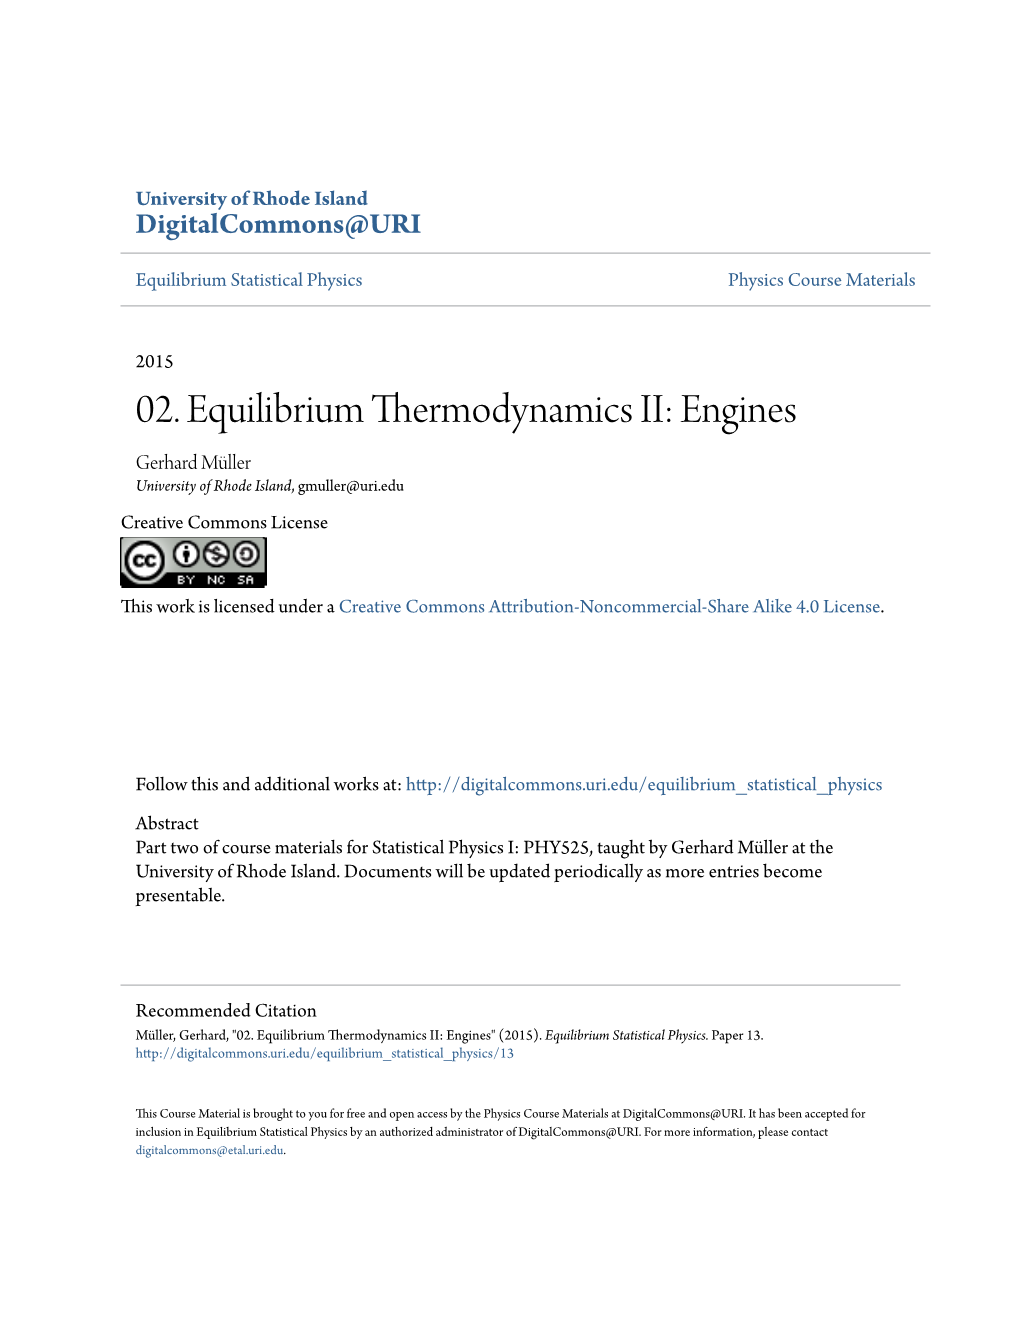 02. Equilibrium Thermodynamics II: Engines Gerhard Müller University of Rhode Island, Gmuller@Uri.Edu Creative Commons License